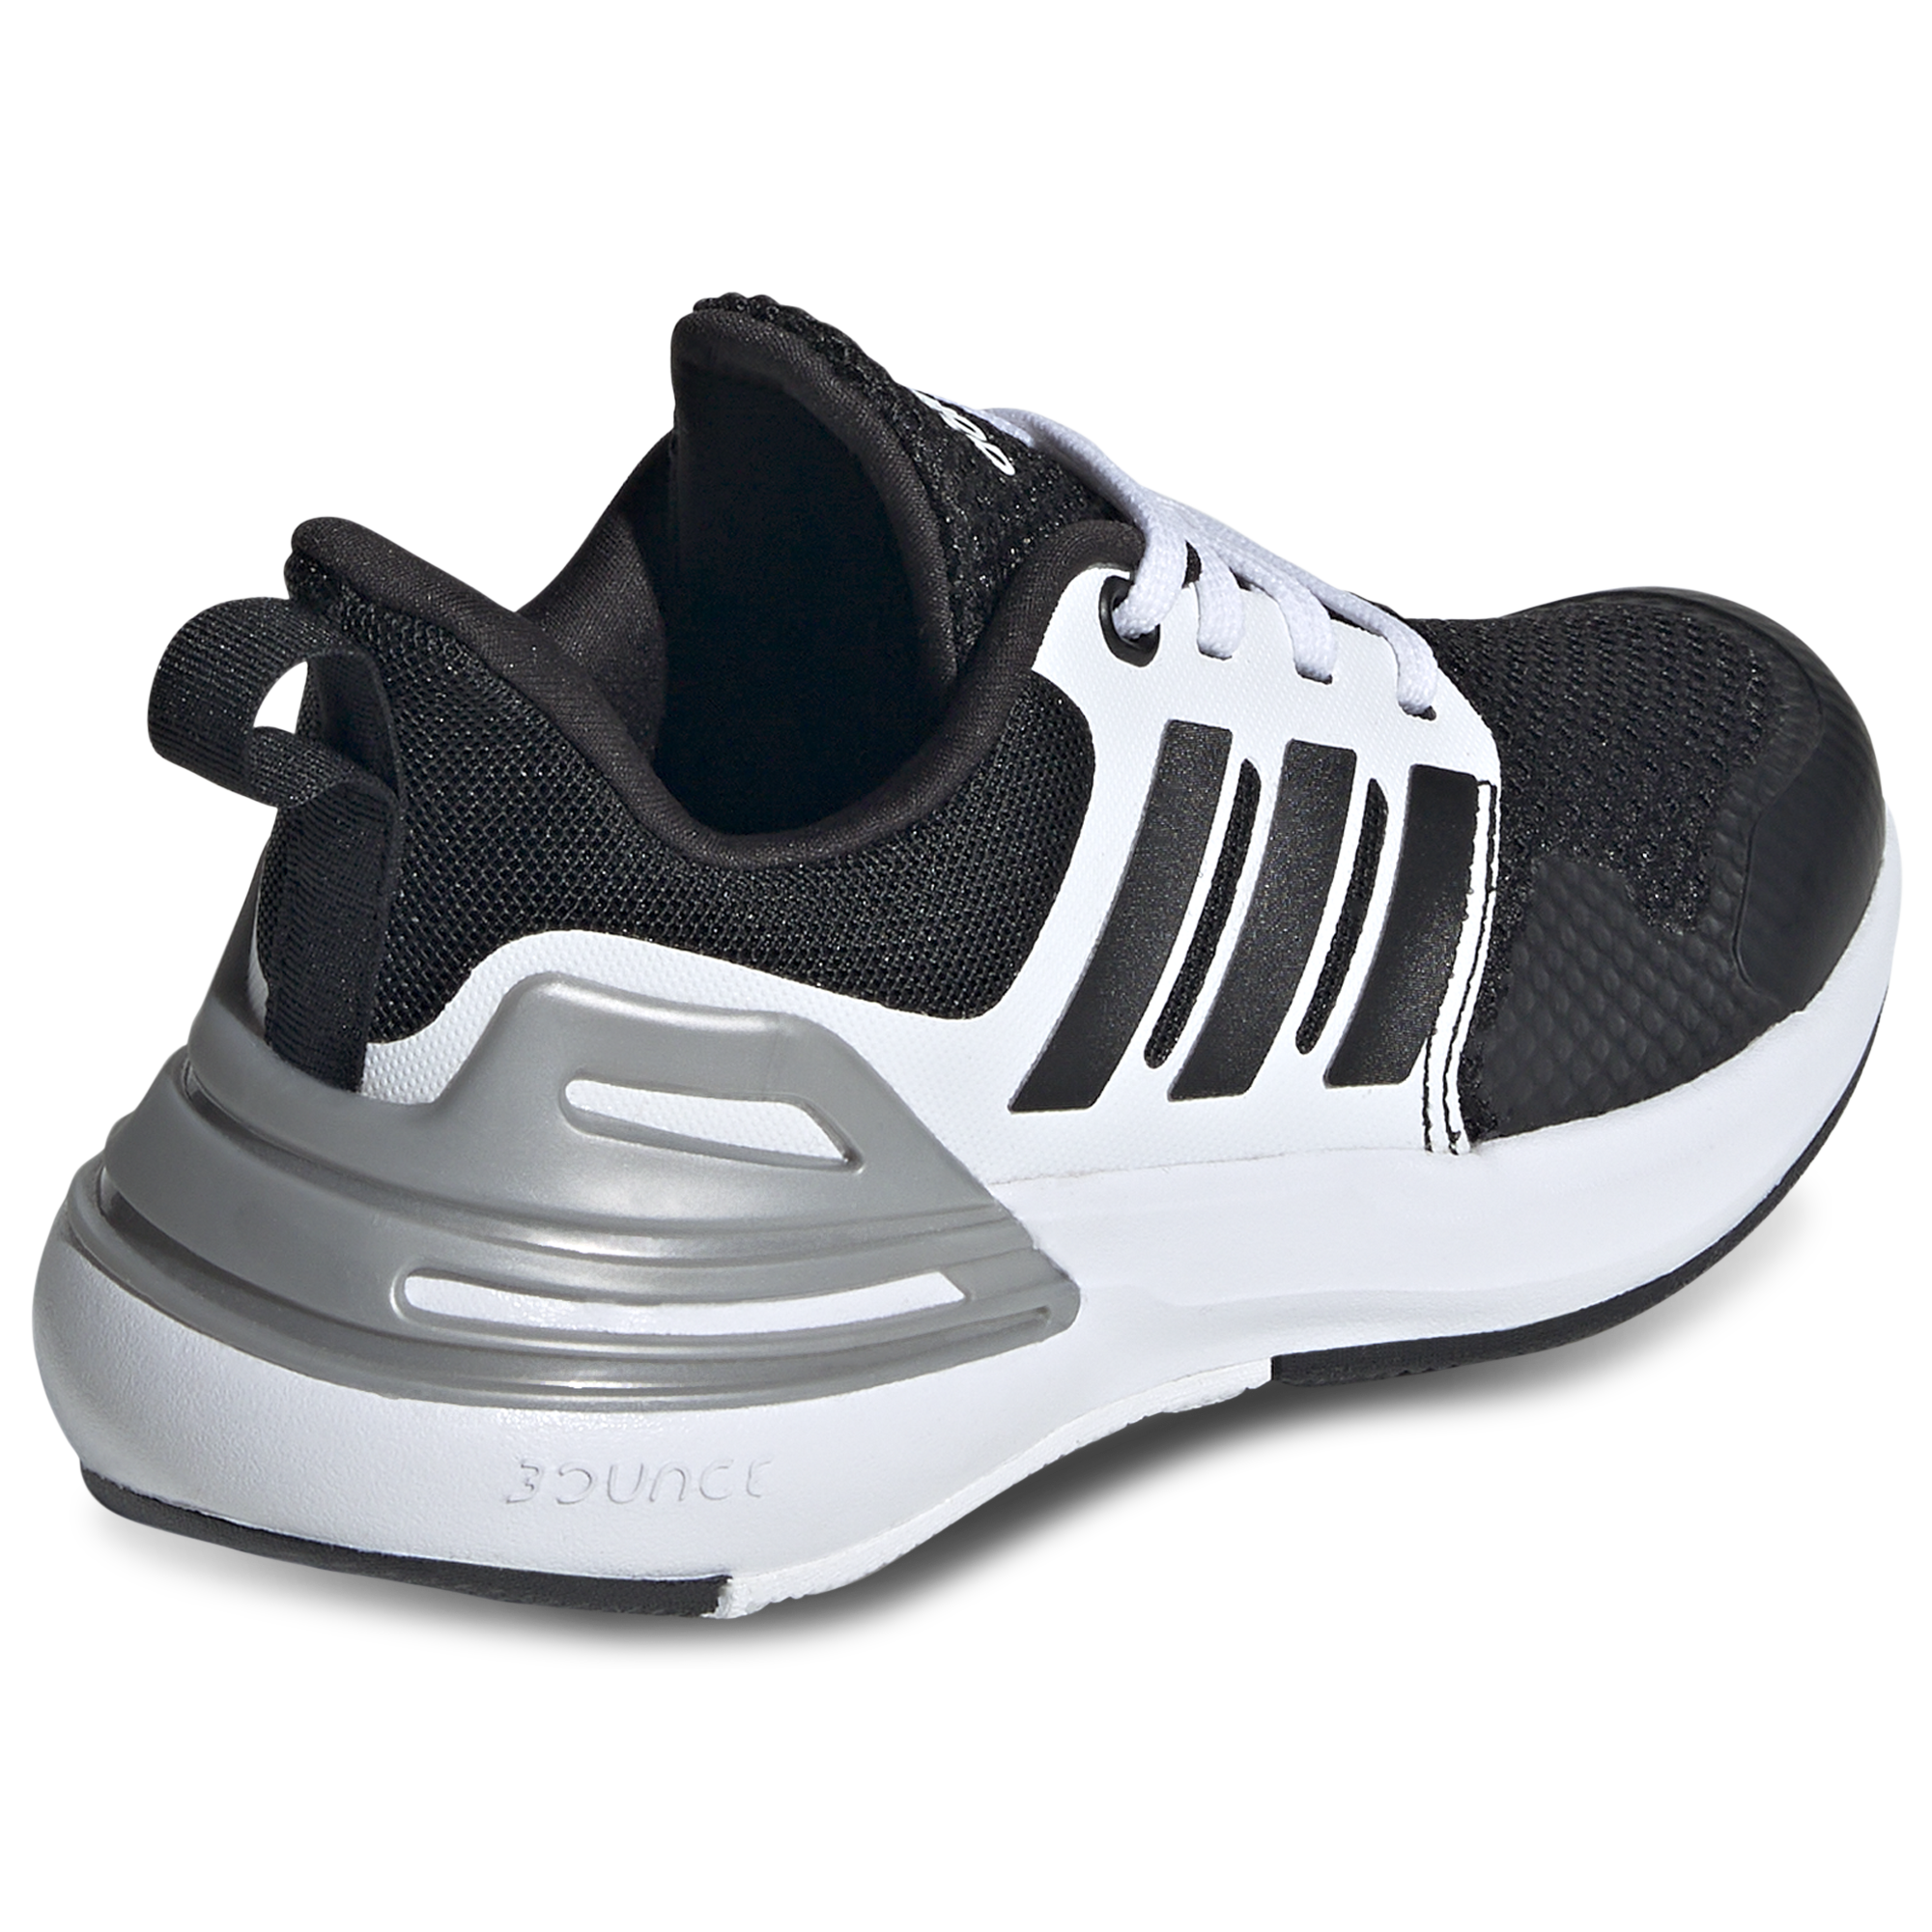 A-K69 (Adidas rapidasport shoes black/white) 42495292